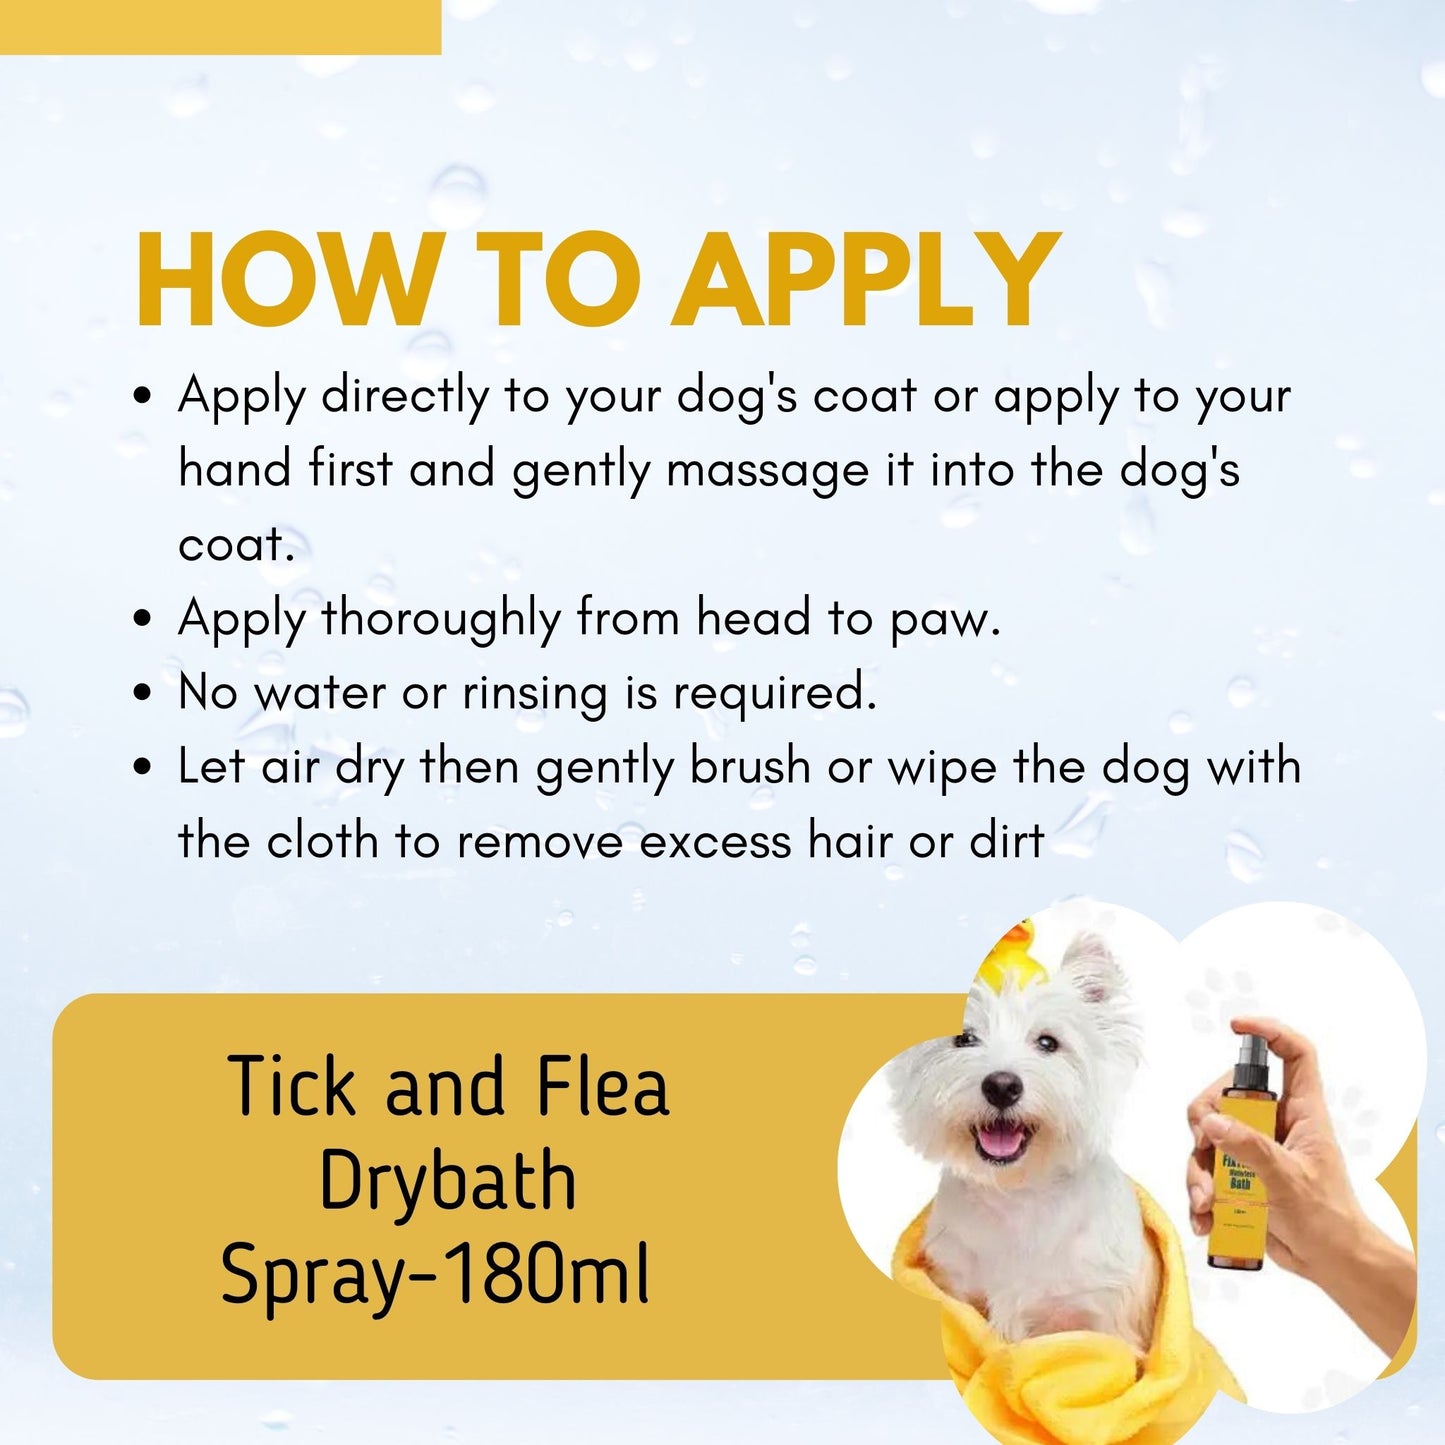 Foodie Puppies FixTicks Tick & Flea Dog Waterless Drybath Spray, 180ml